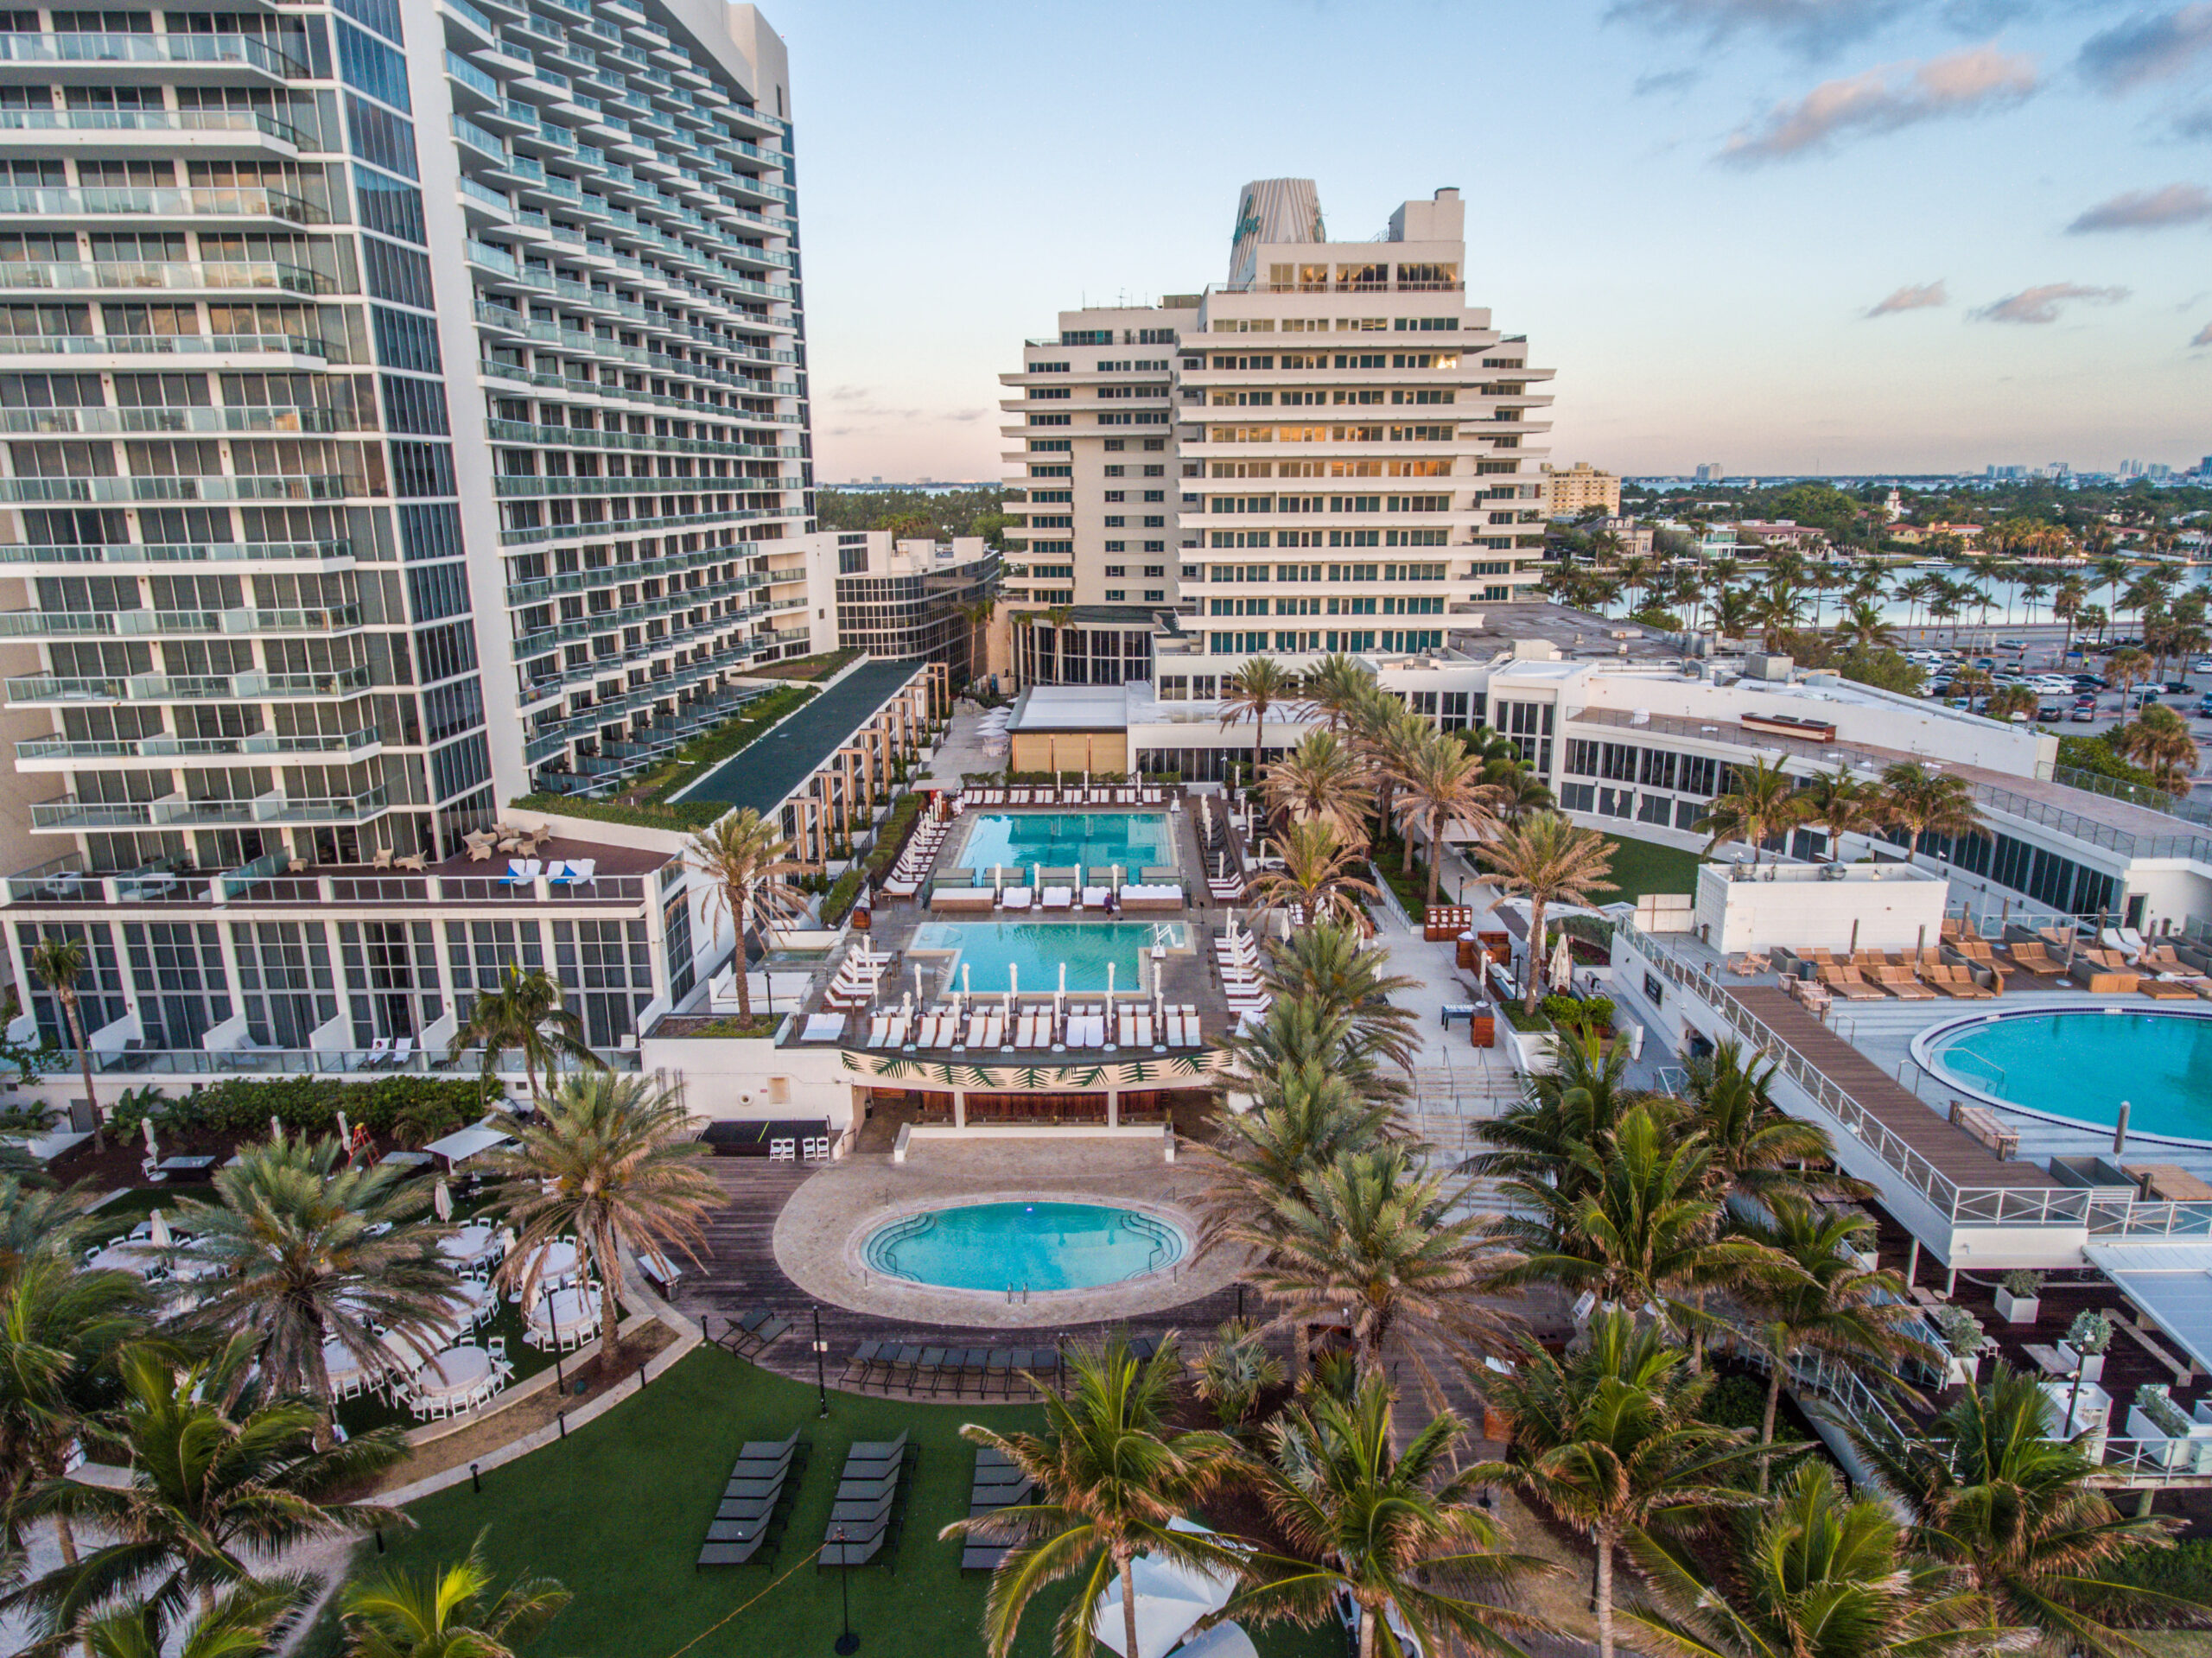 Diego san hotel pacific beach hotels terrace pools pool la beachfront jolla ocean courtesy expect review lajollamom views